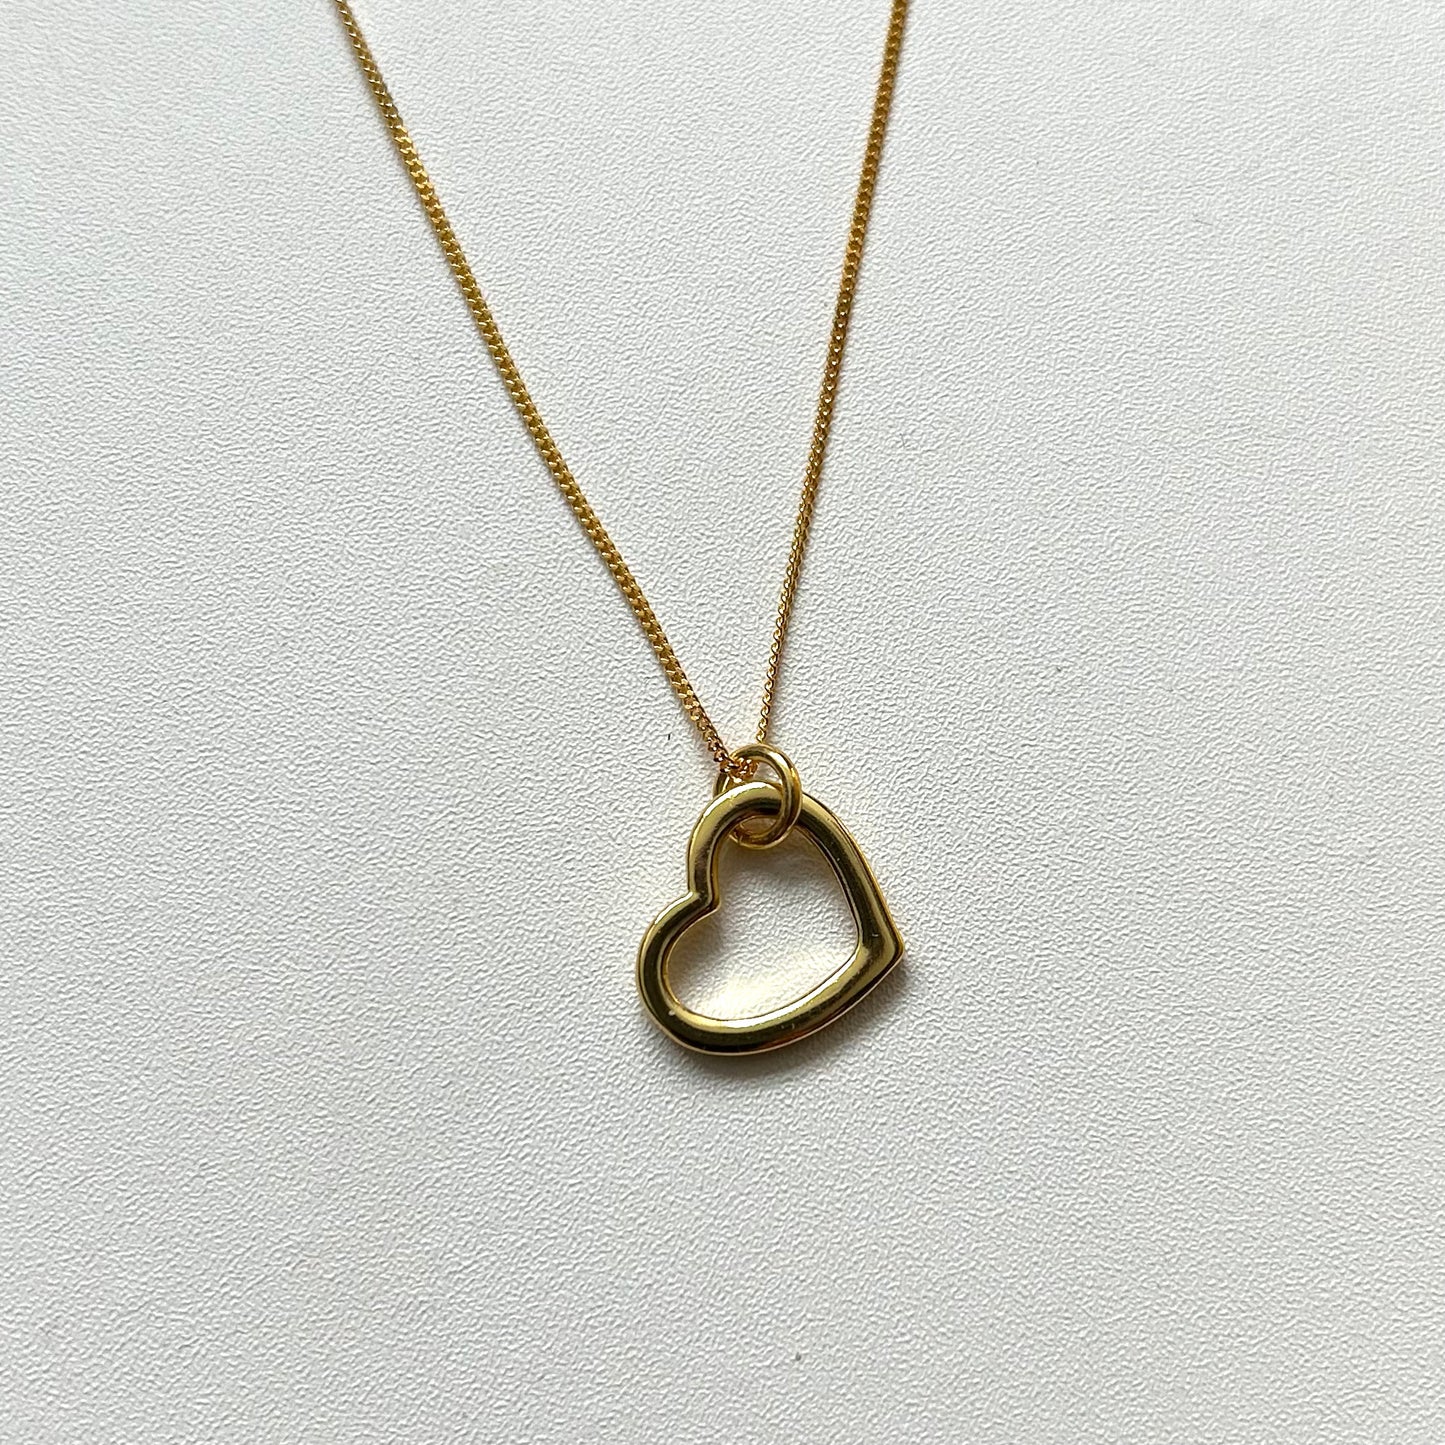 Sideways heart necklace